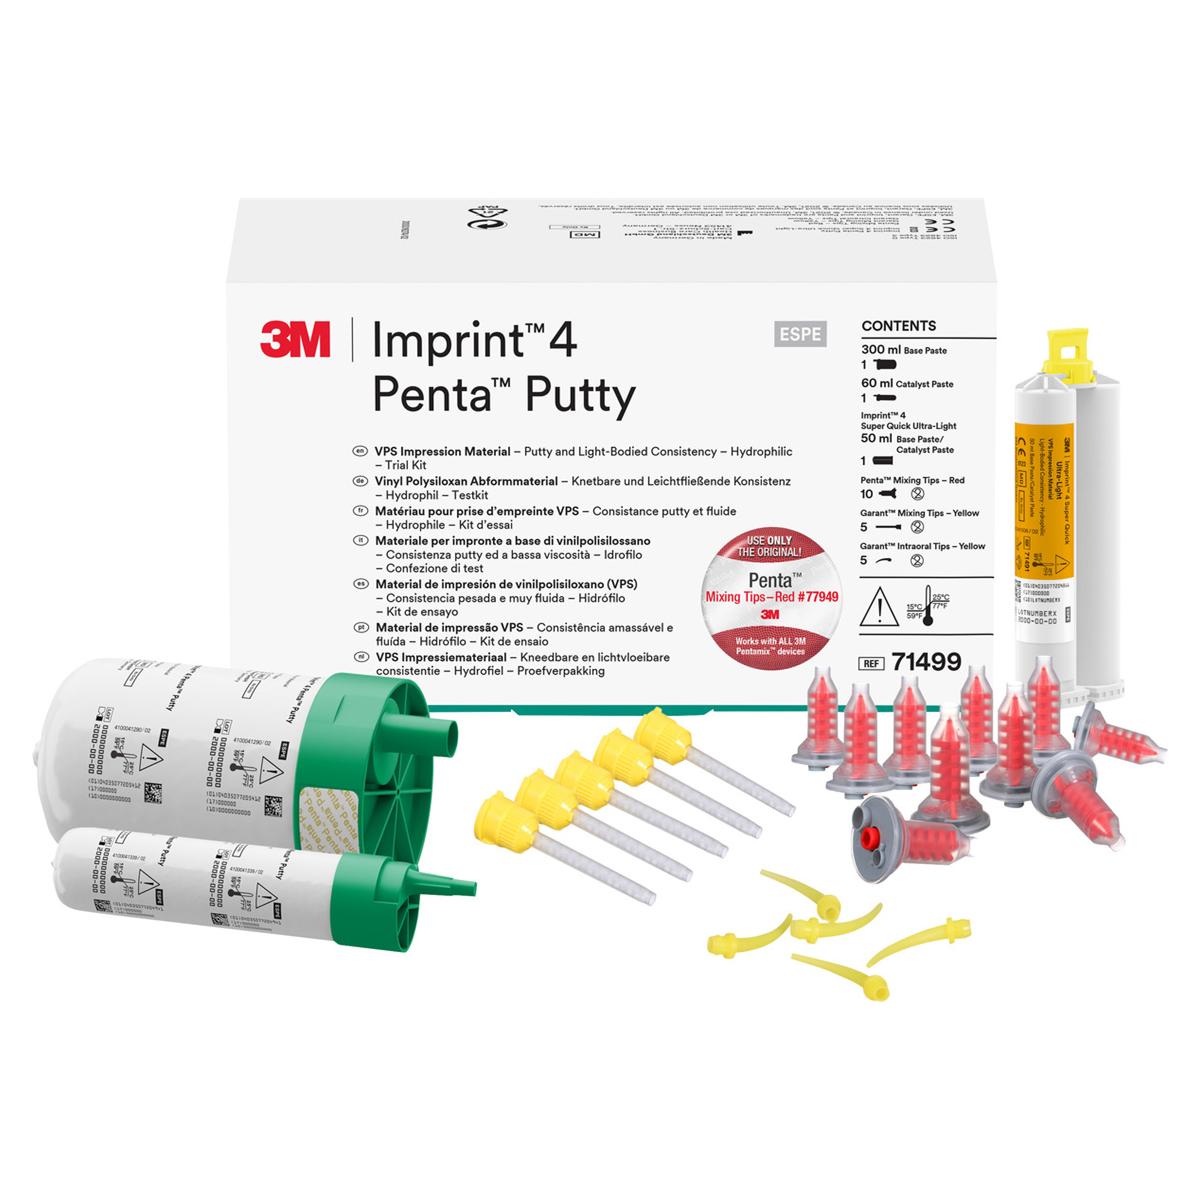 3M Imprint™ 4 Penta™ - Trial Kit - Putty